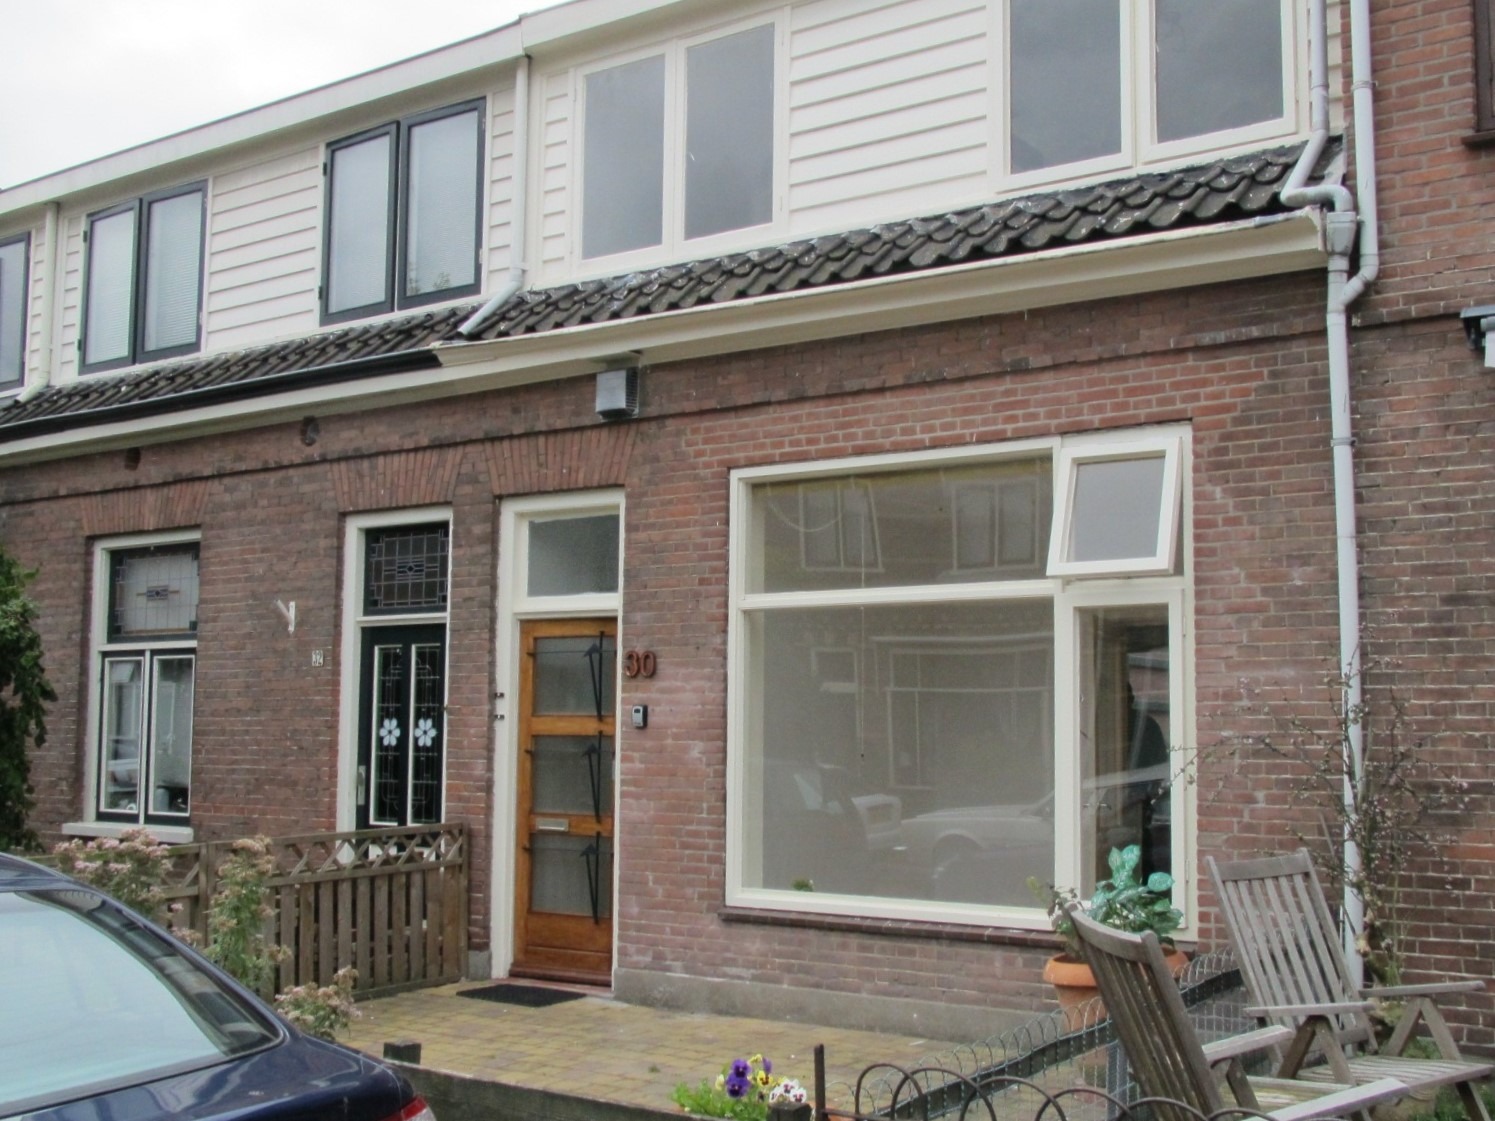 Woning / appartement - Hilversum - Kerklaan 30